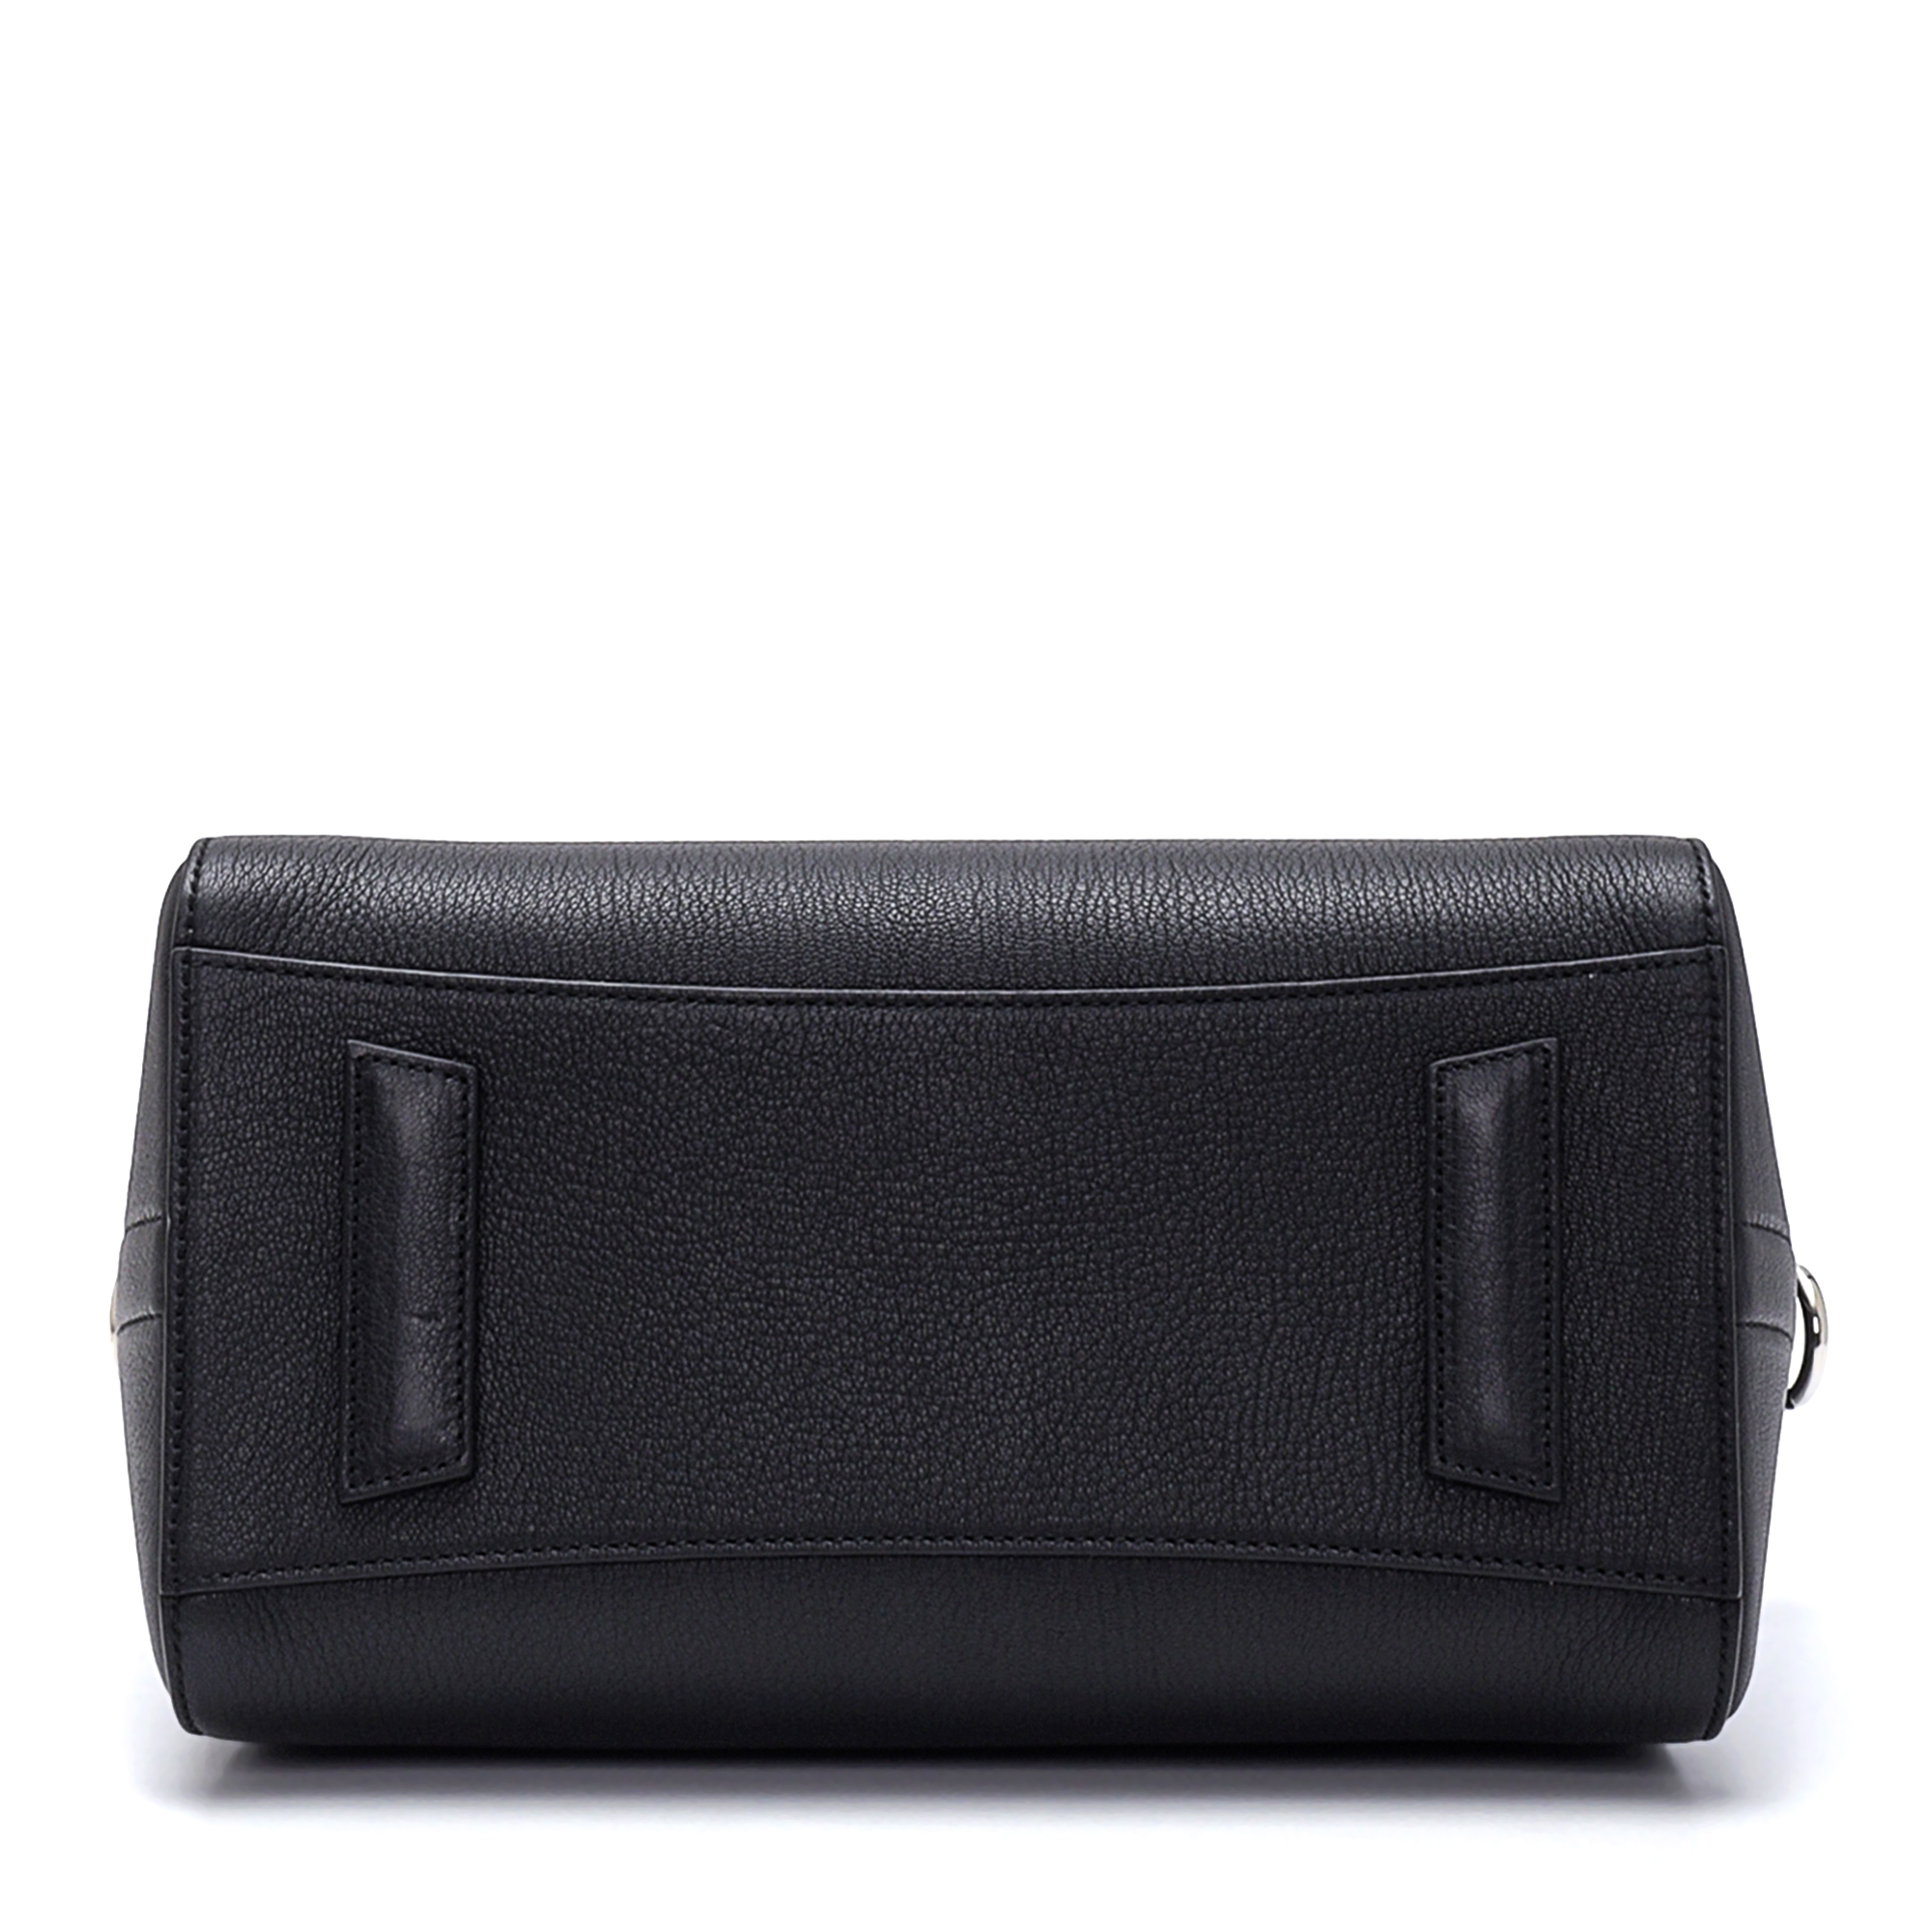 Givenchy - Black Leather Antigona Medium Bag II